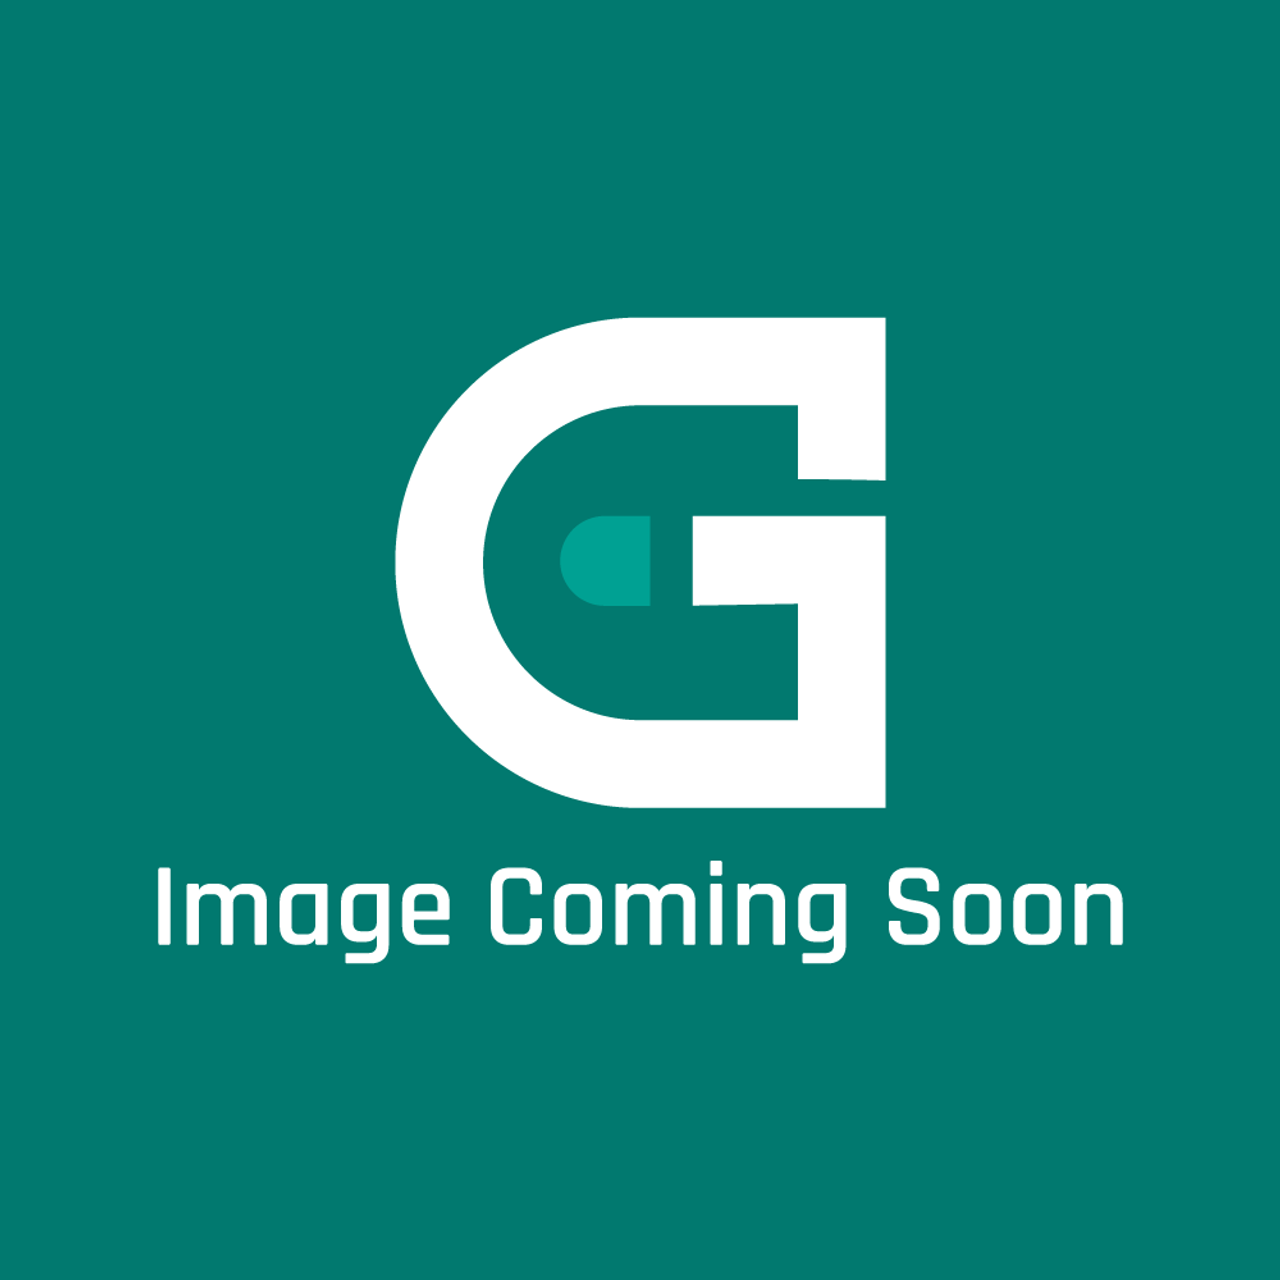 GE Appliances WB56X30671 - Inner Door Glass - Image Coming Soon!